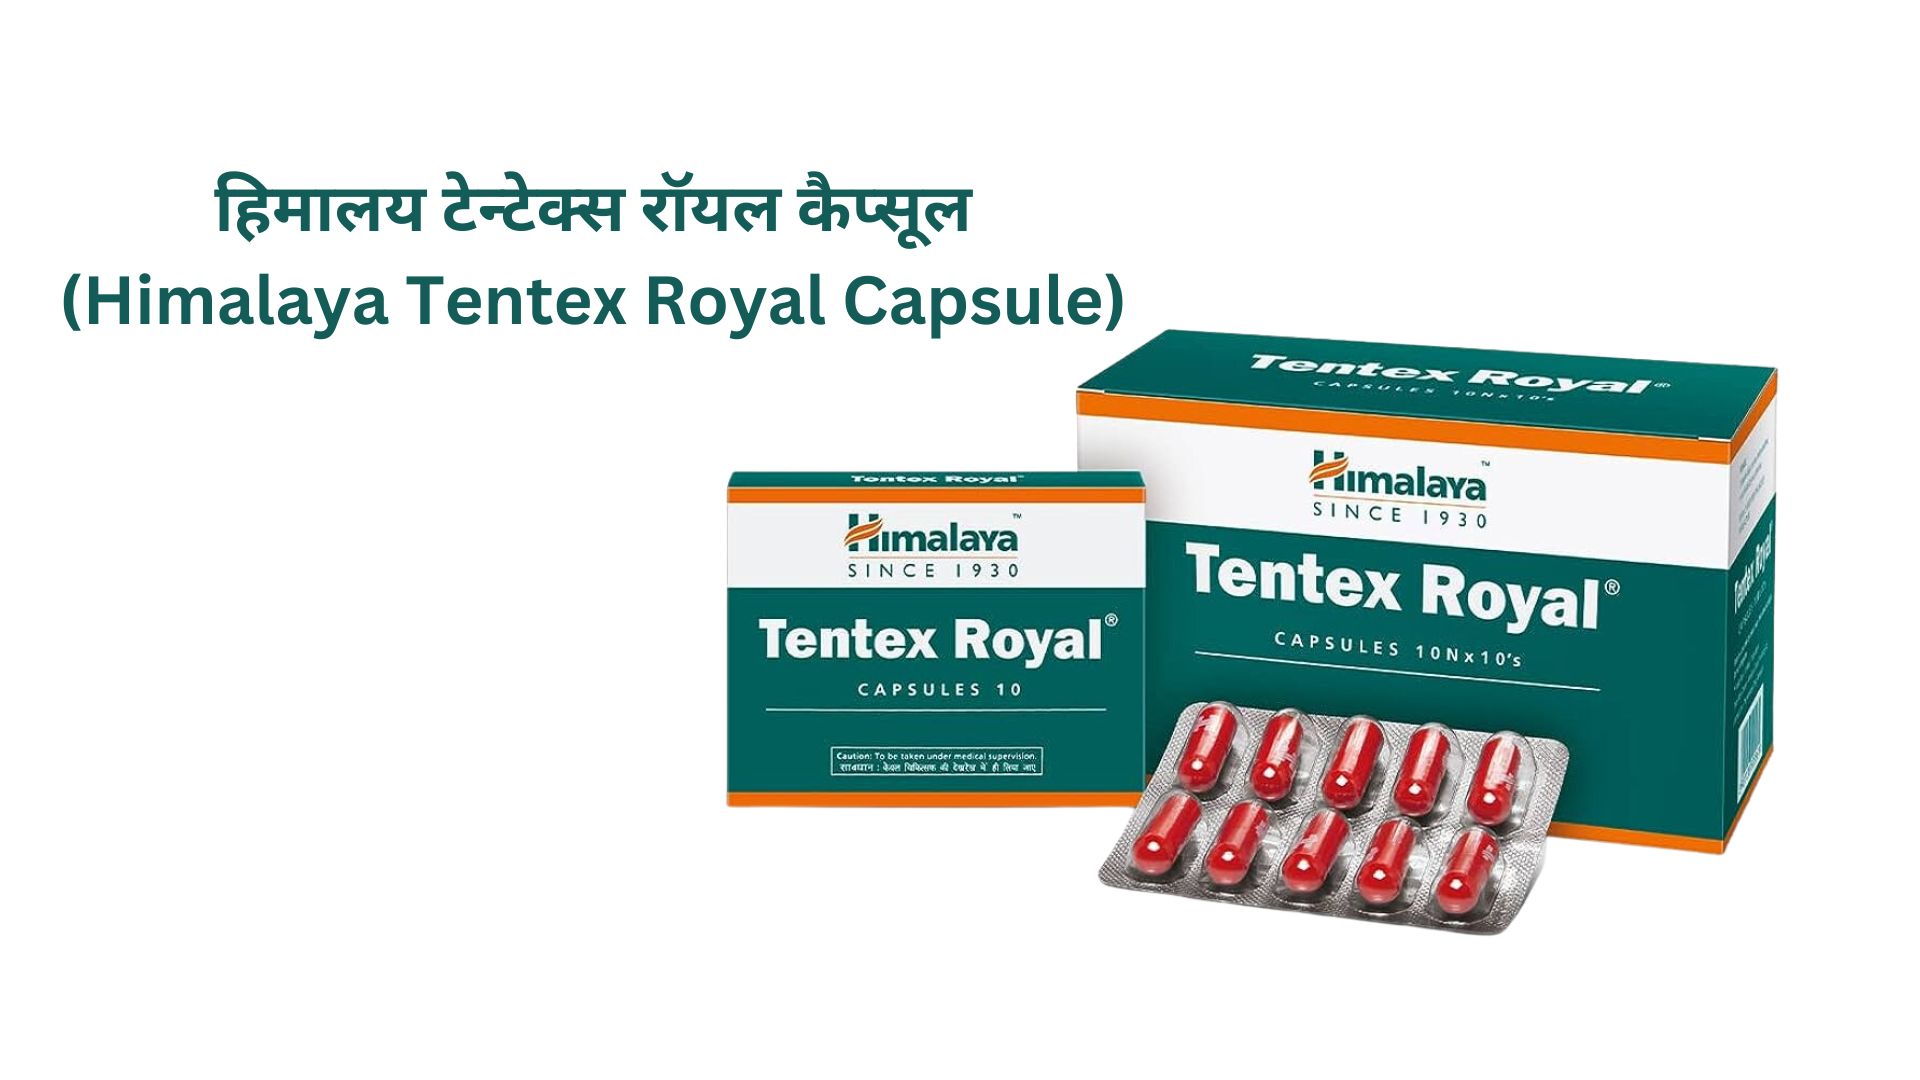 हिमालय टेन्टेक्स रॉयल कैप्सूल (Himalaya Tentex Royal Capsule)